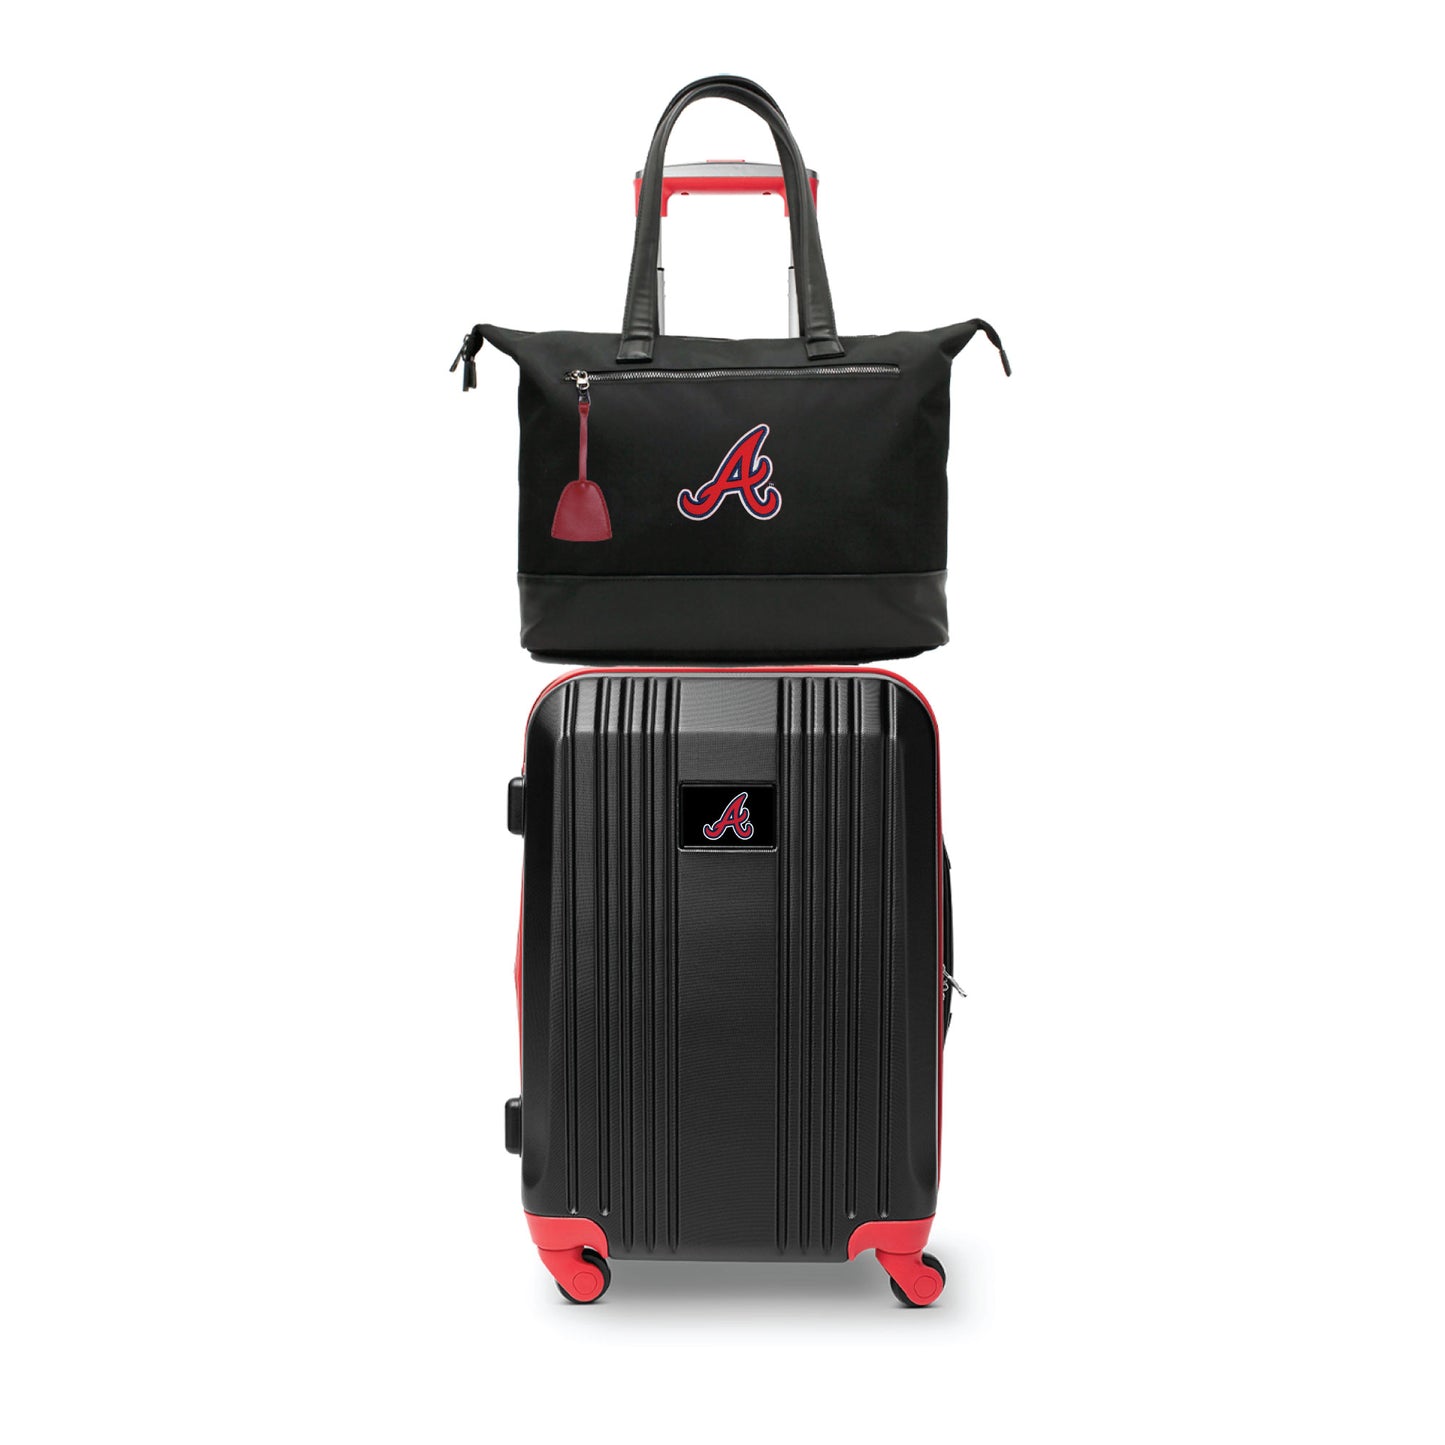 Atlanta Braves Premium Laptop Tote Bag and Luggage Set